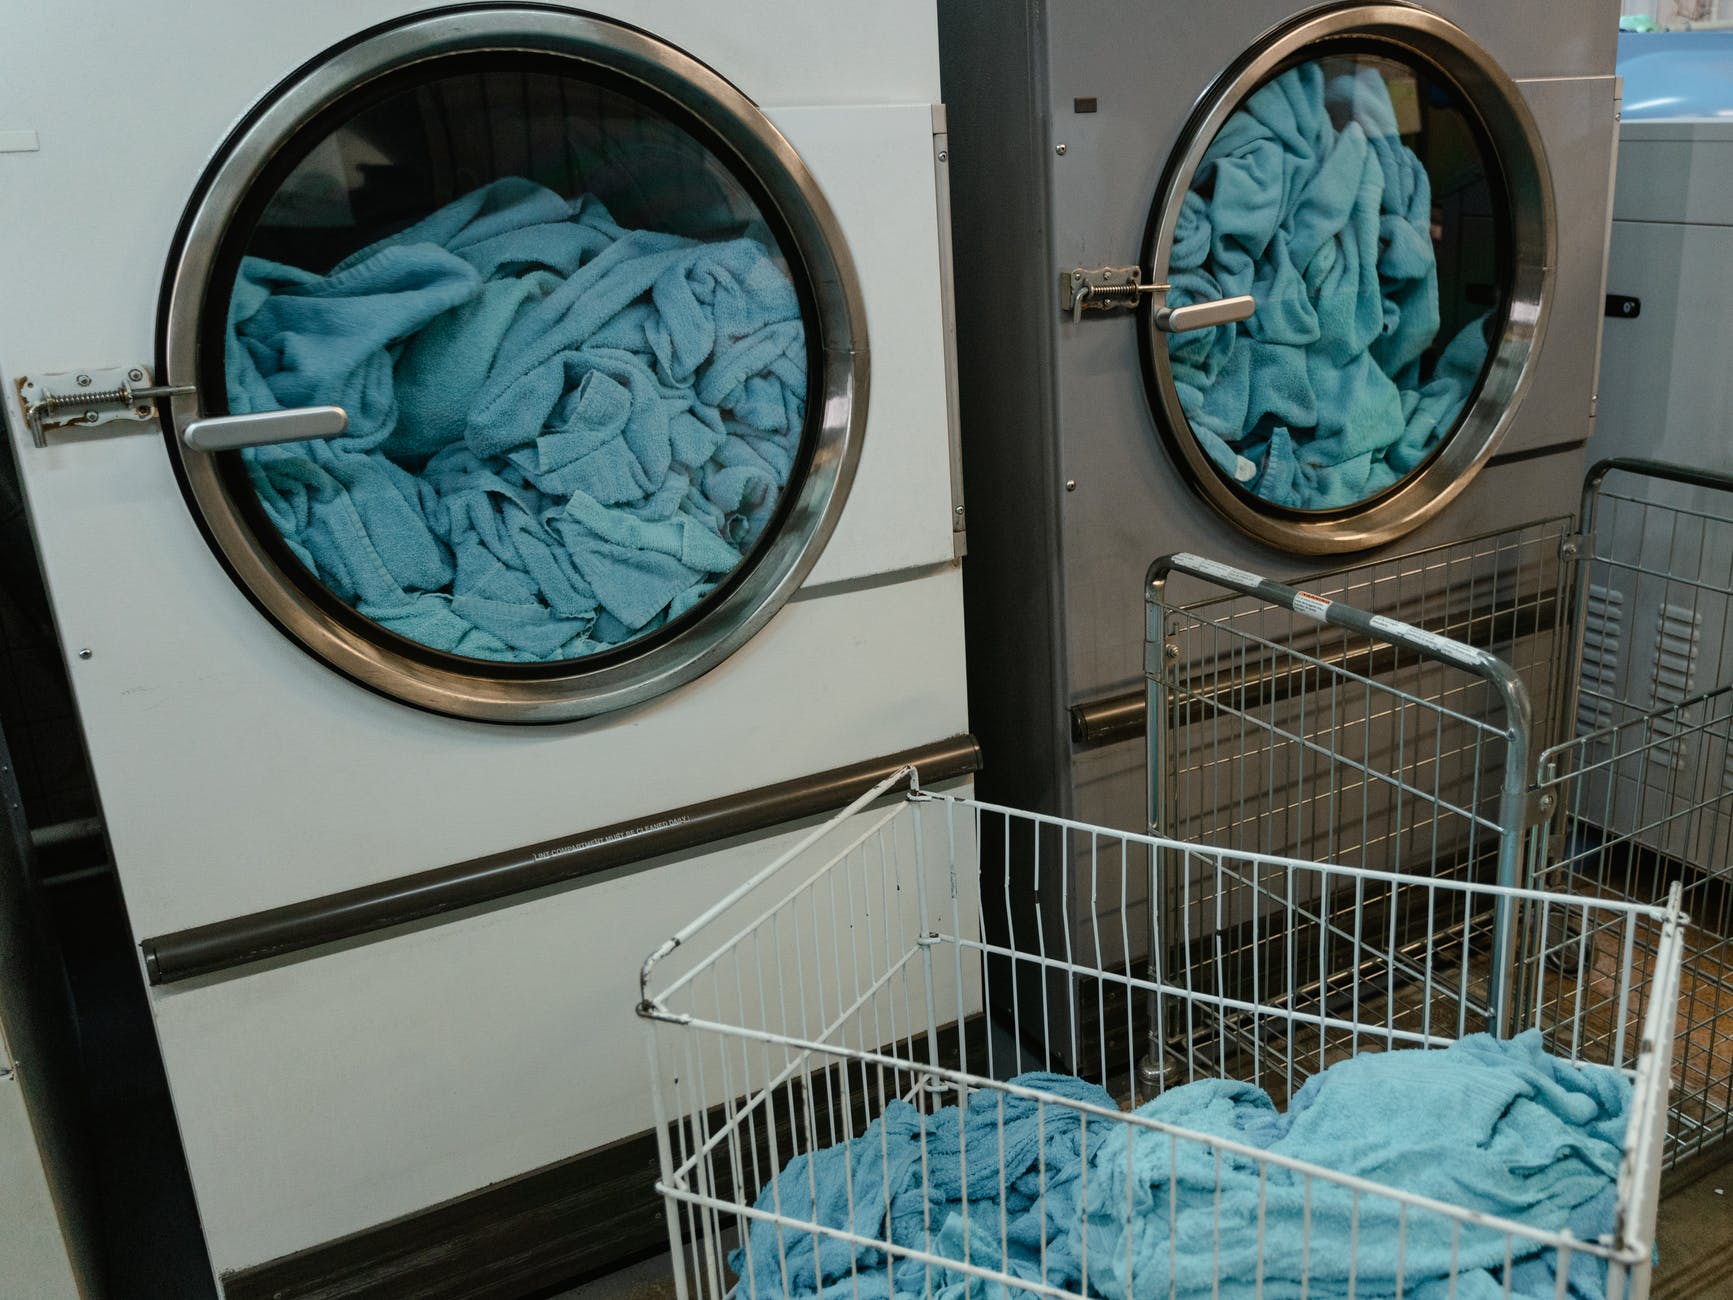 white and gray washing machine with blue fabrics inside